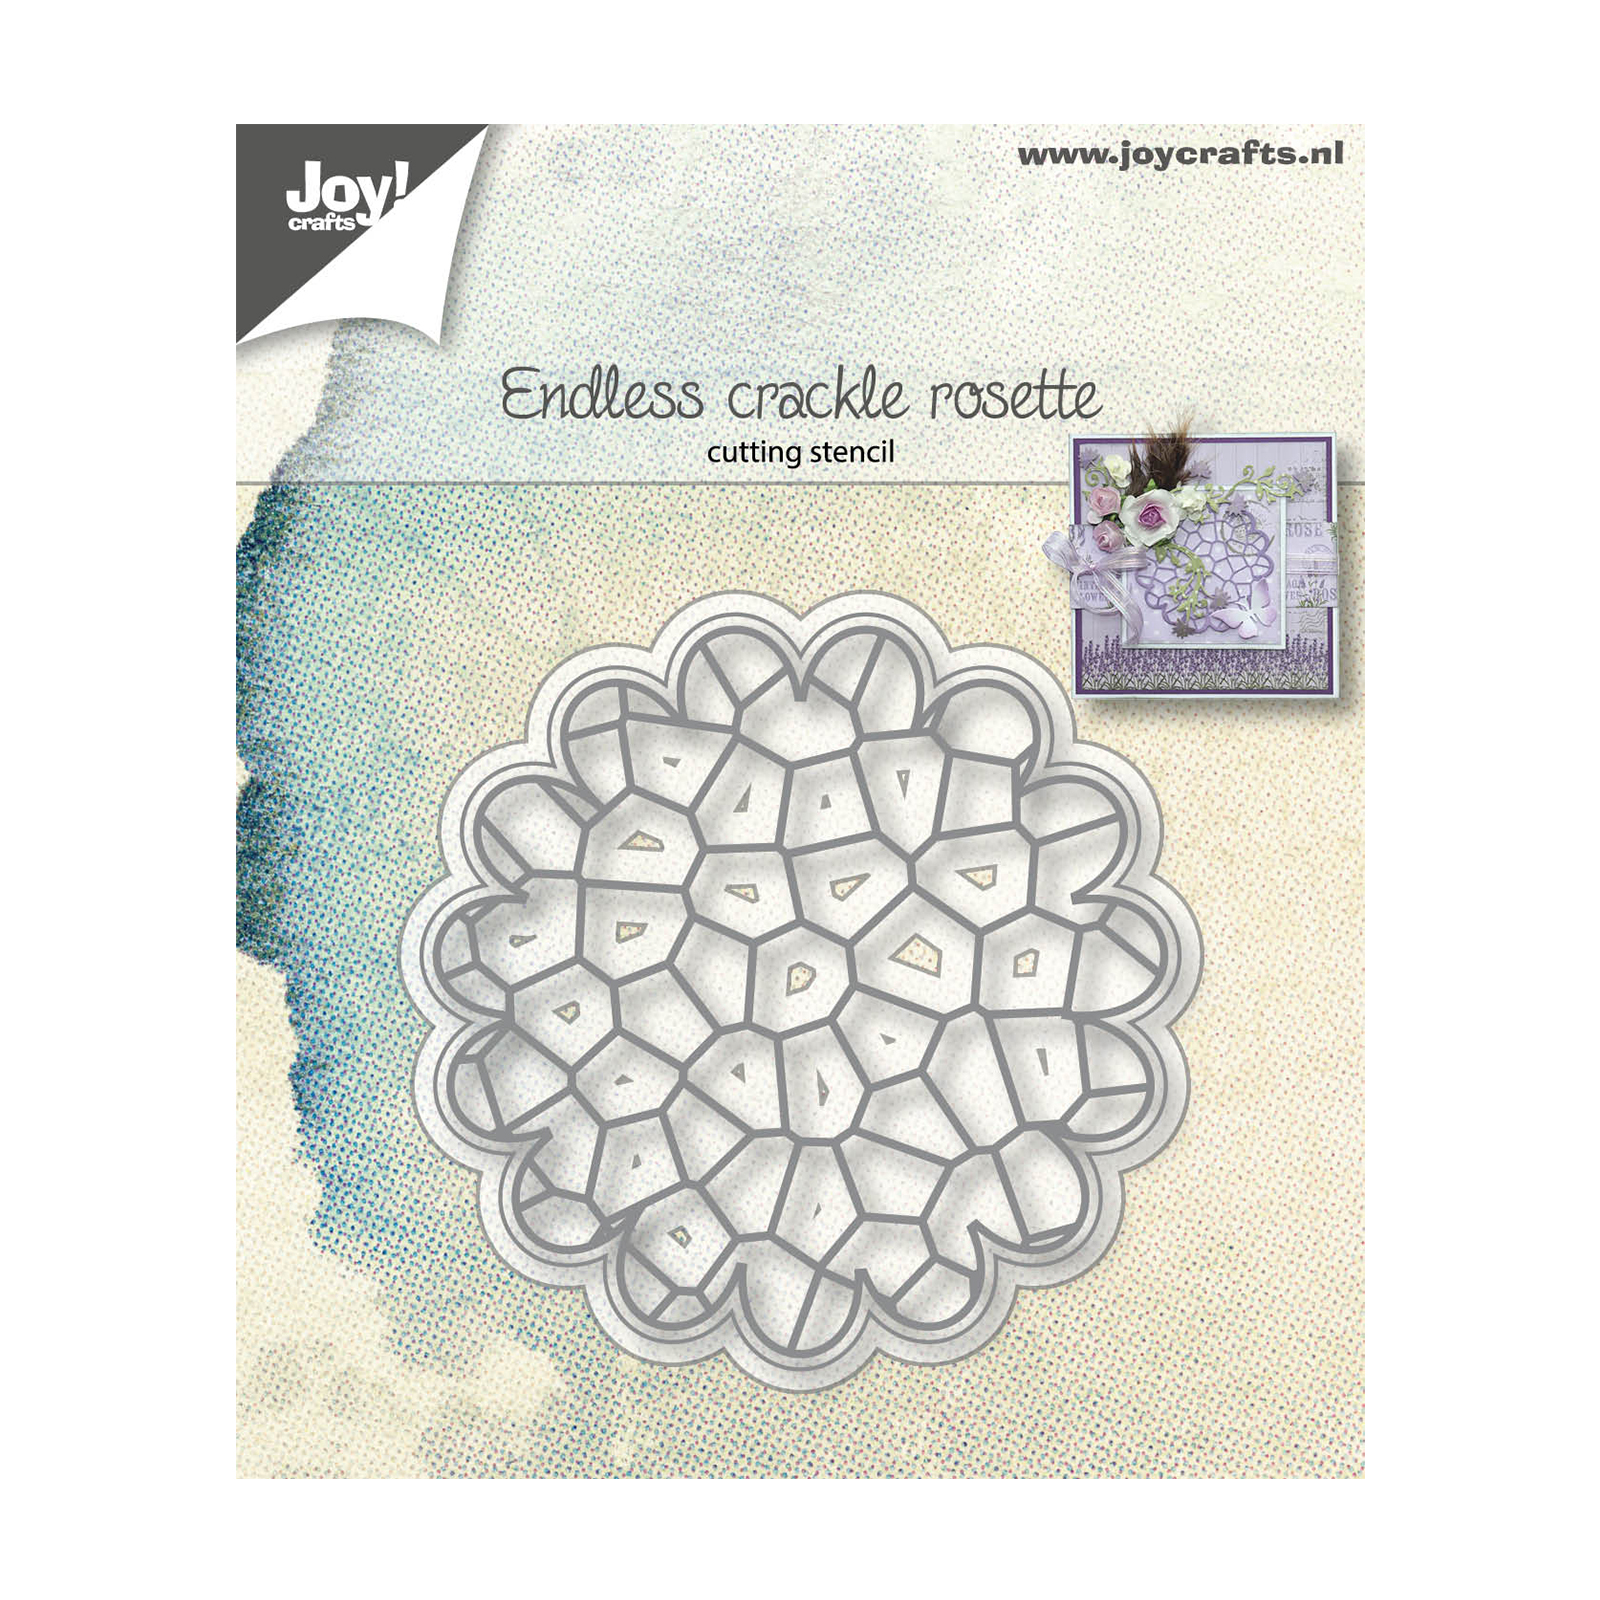 Joy!Crafts • Stanzschablone Endless Crackle rosette